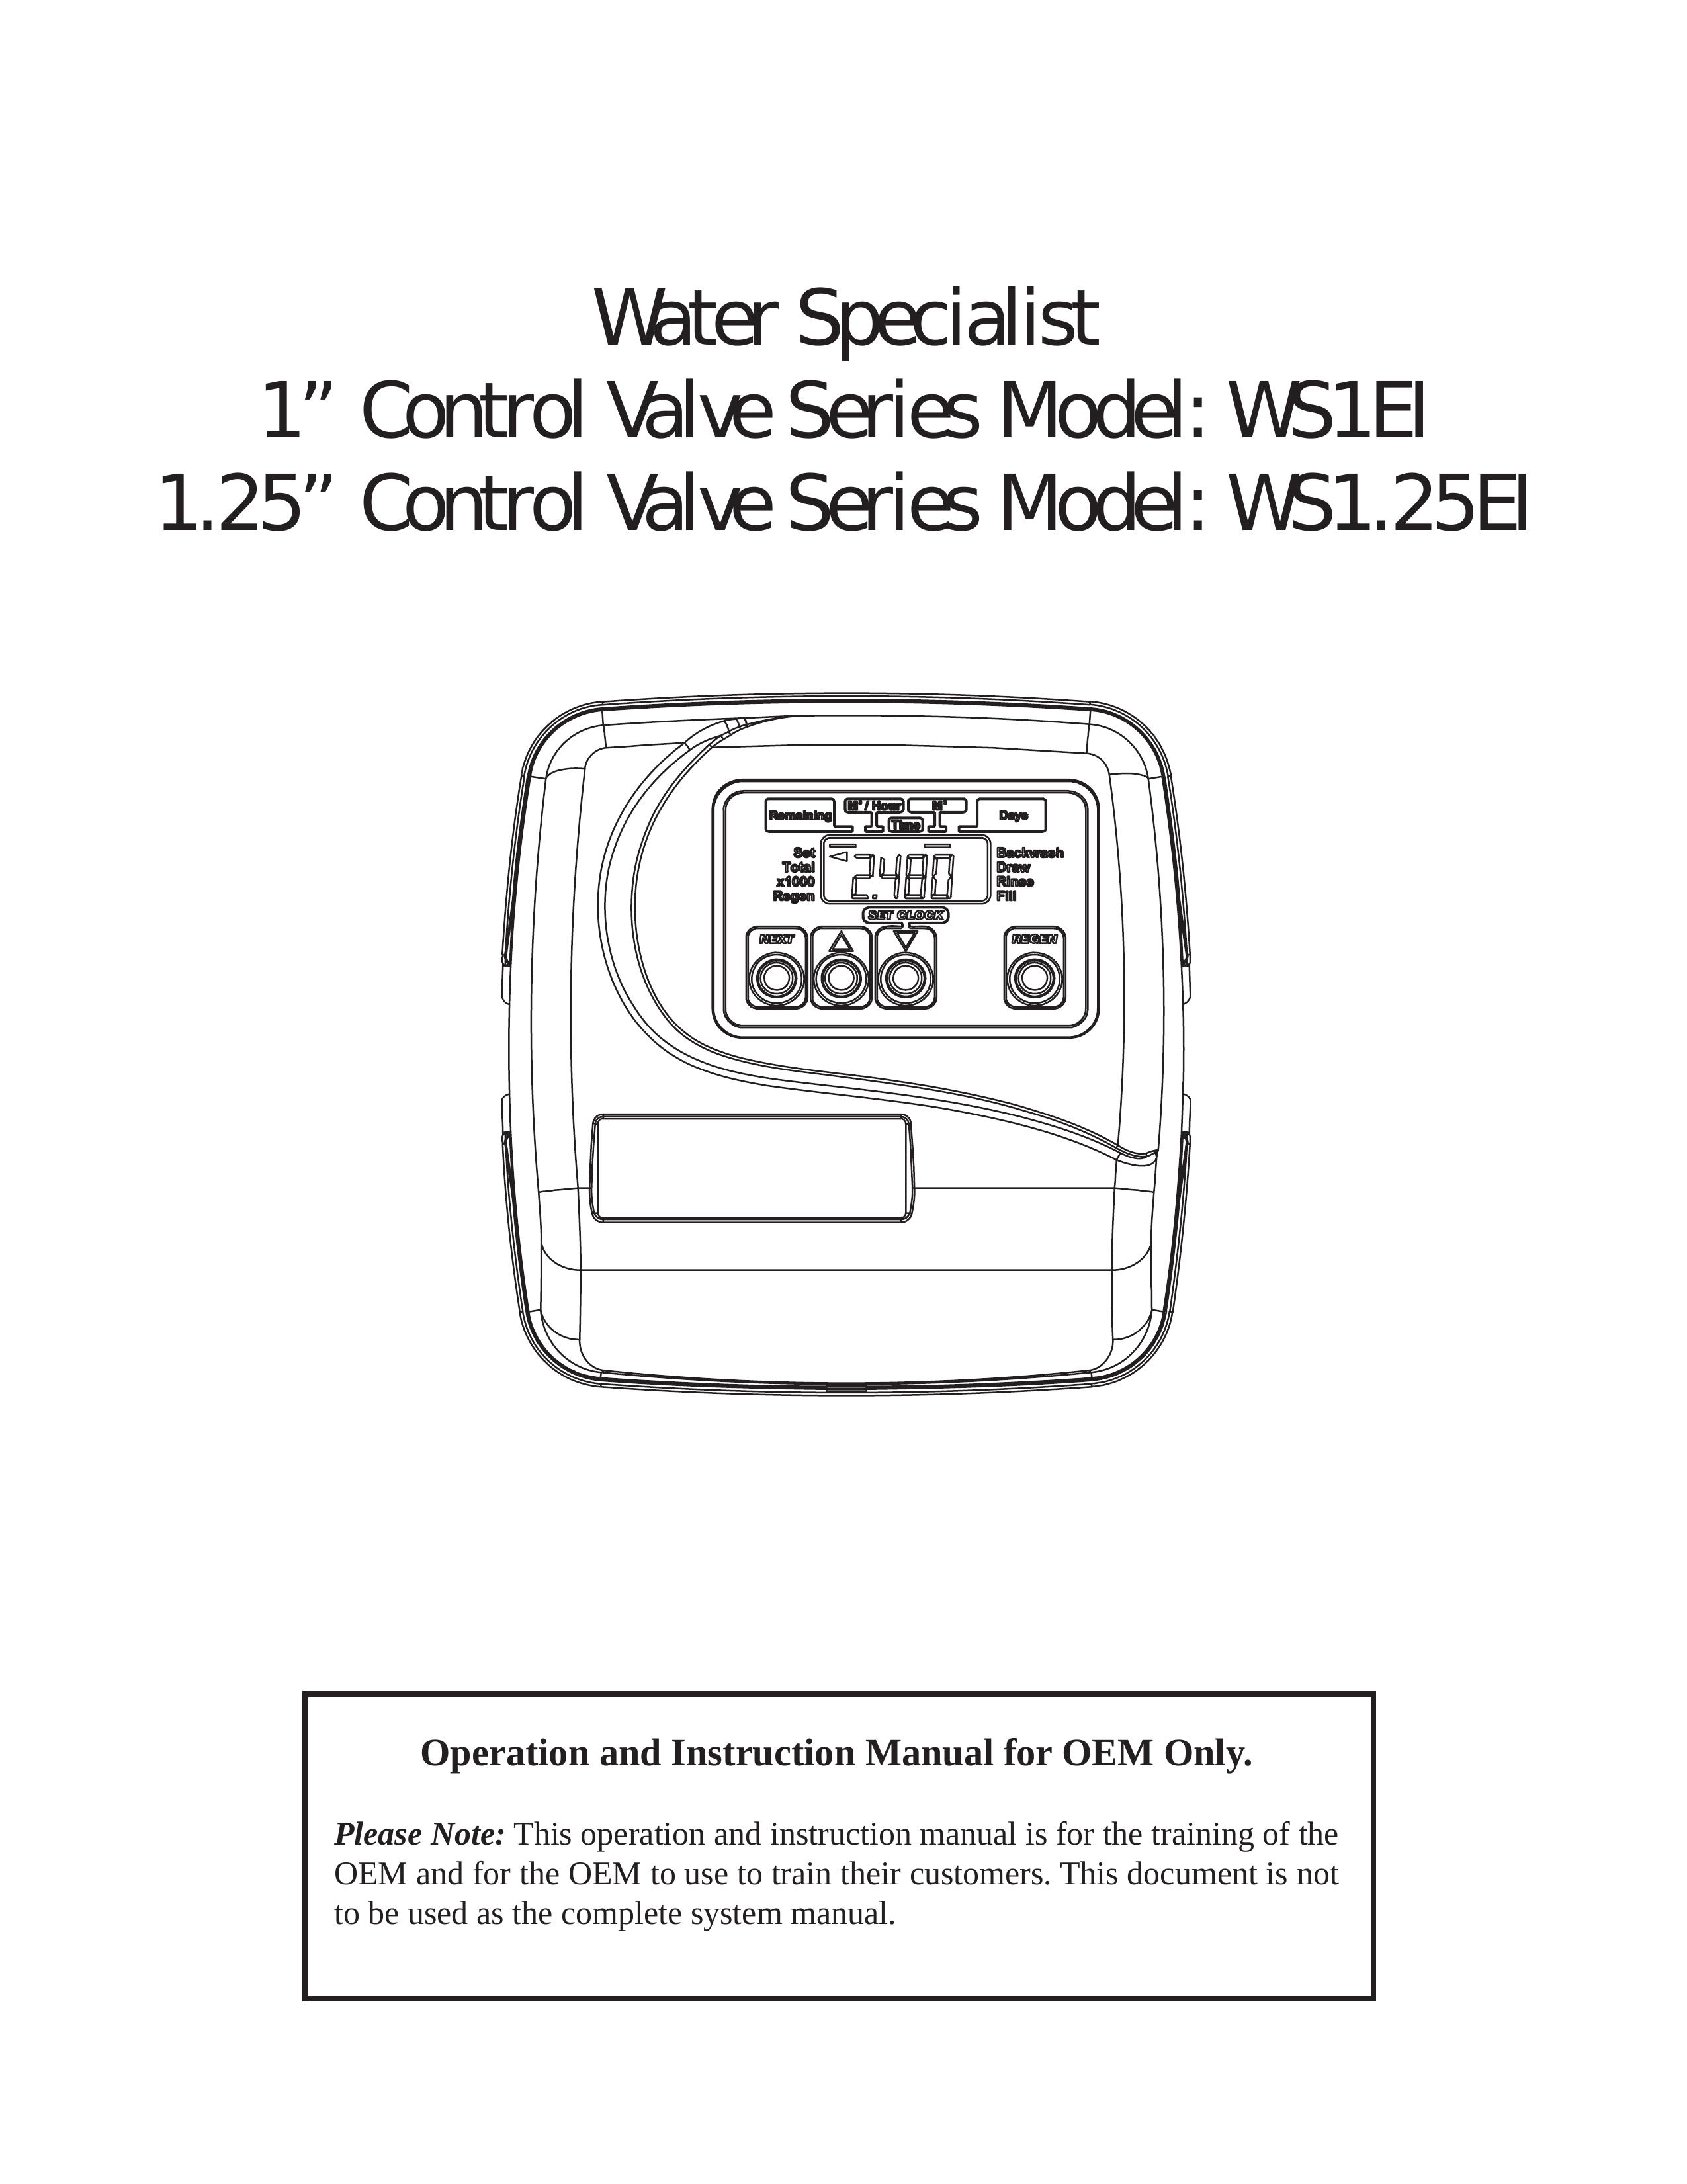 OEM Systems WS1EI Waterskis User Manual